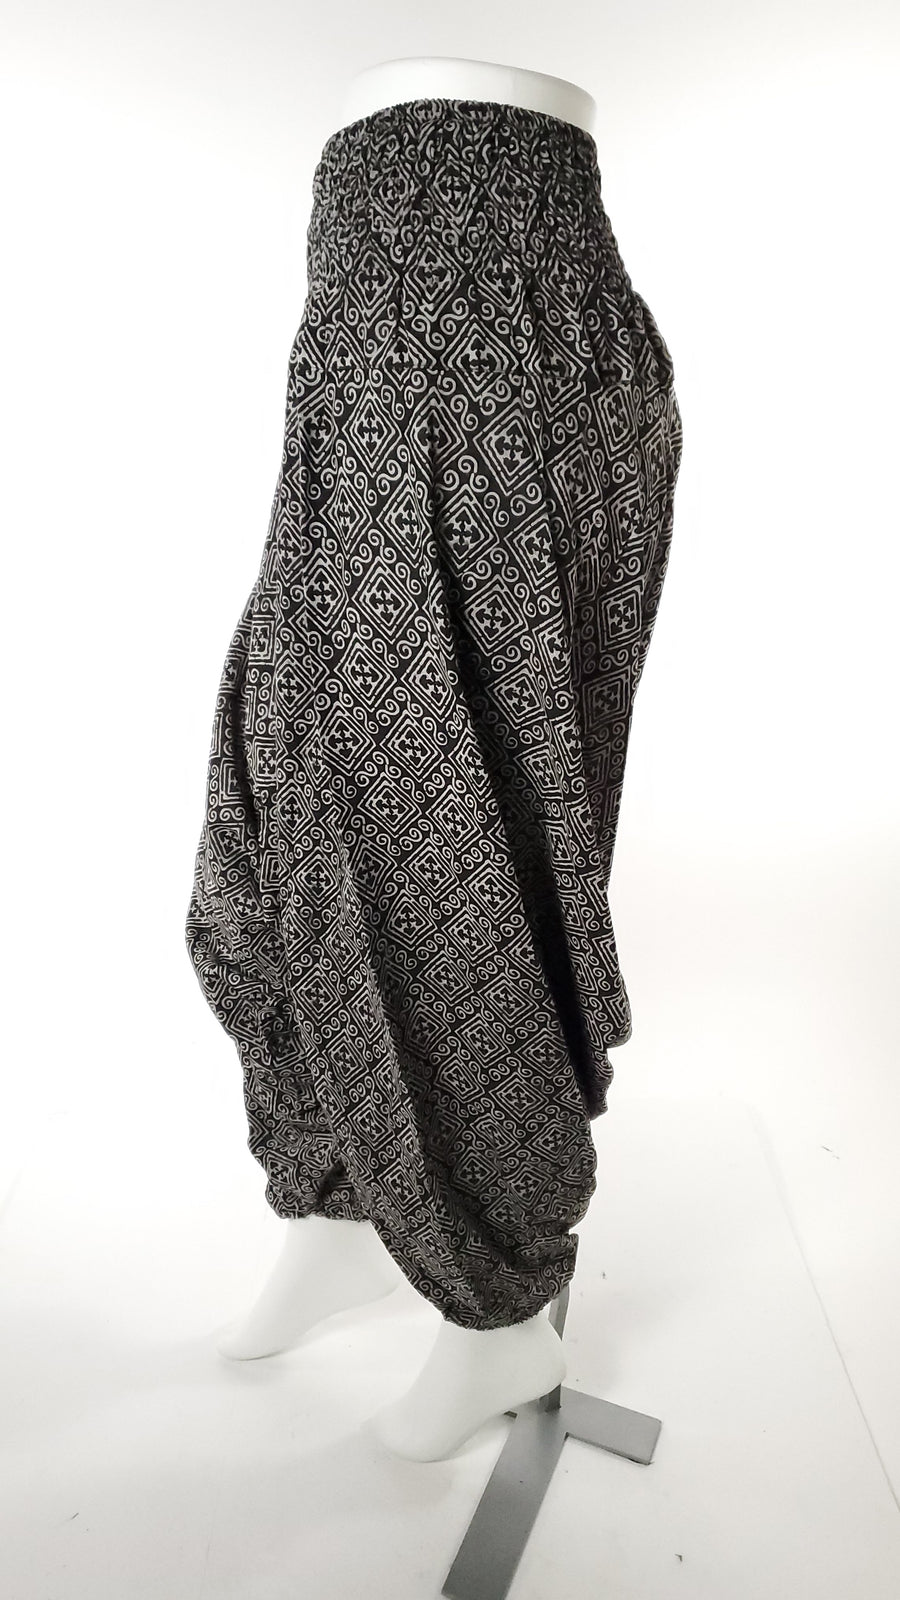 Women's Low Cut Harem Pants in Black Block Print-The High Thai-The High Thai-Yoga Pants-Harem Pants-Hippie Clothing-San Diego